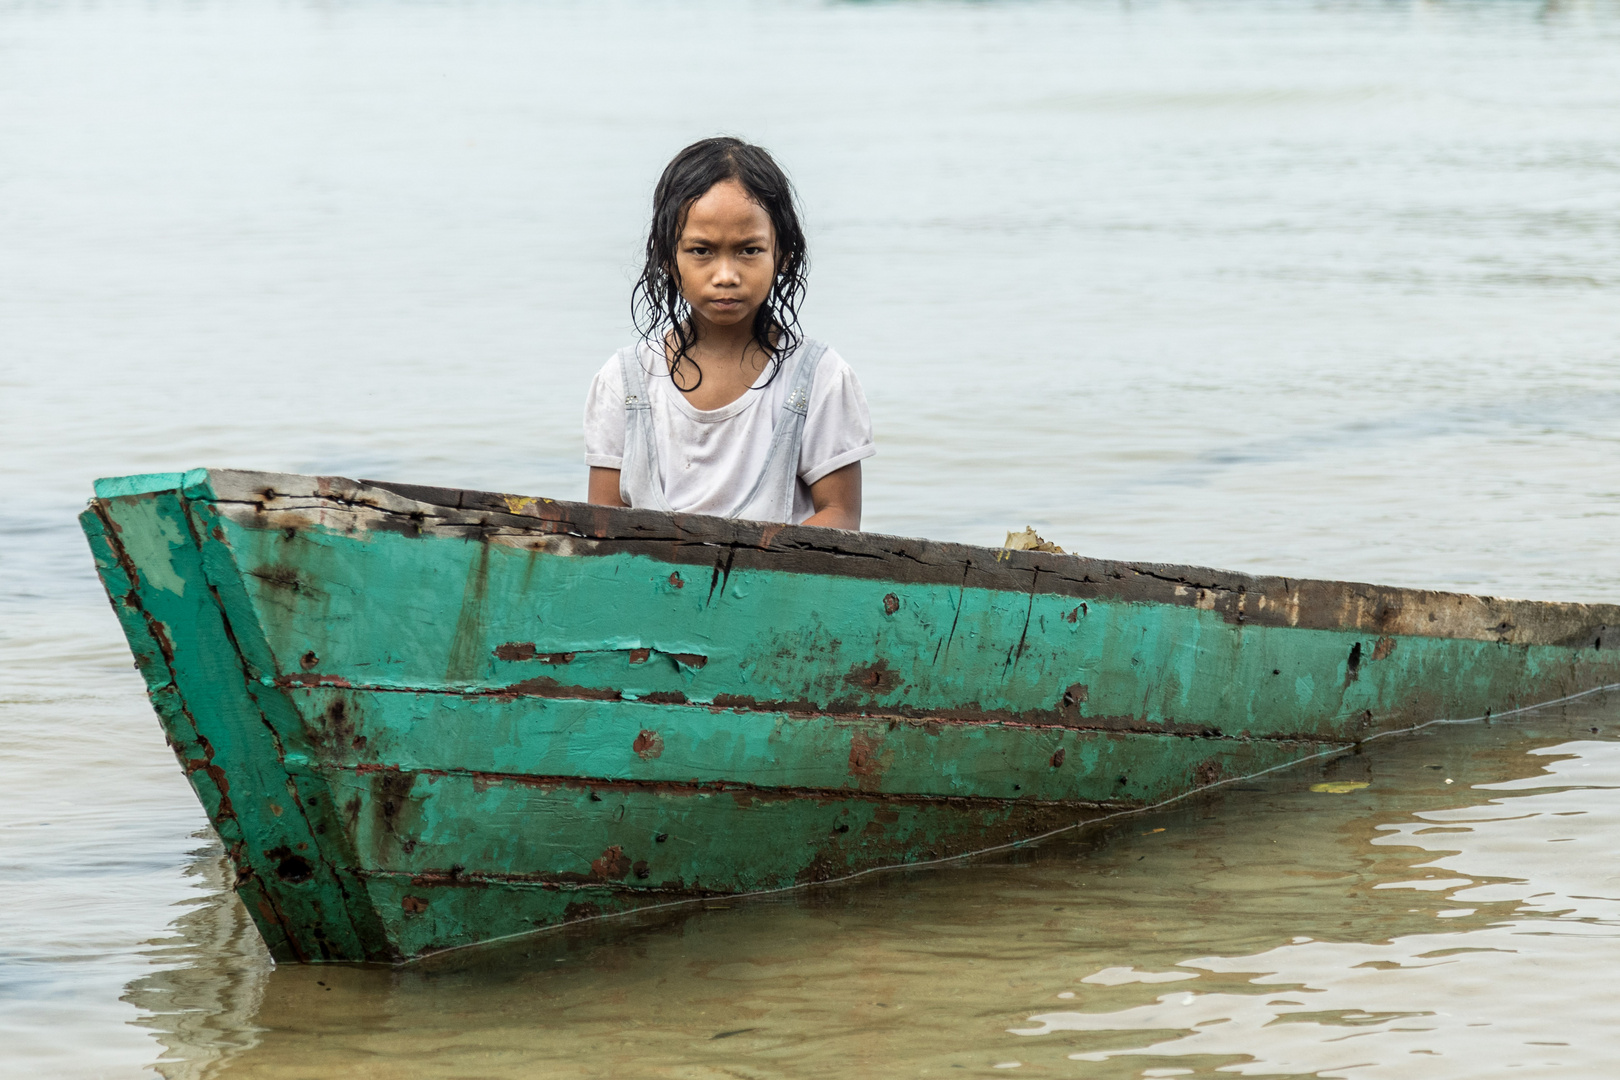 Kambodscha Boat-Girl